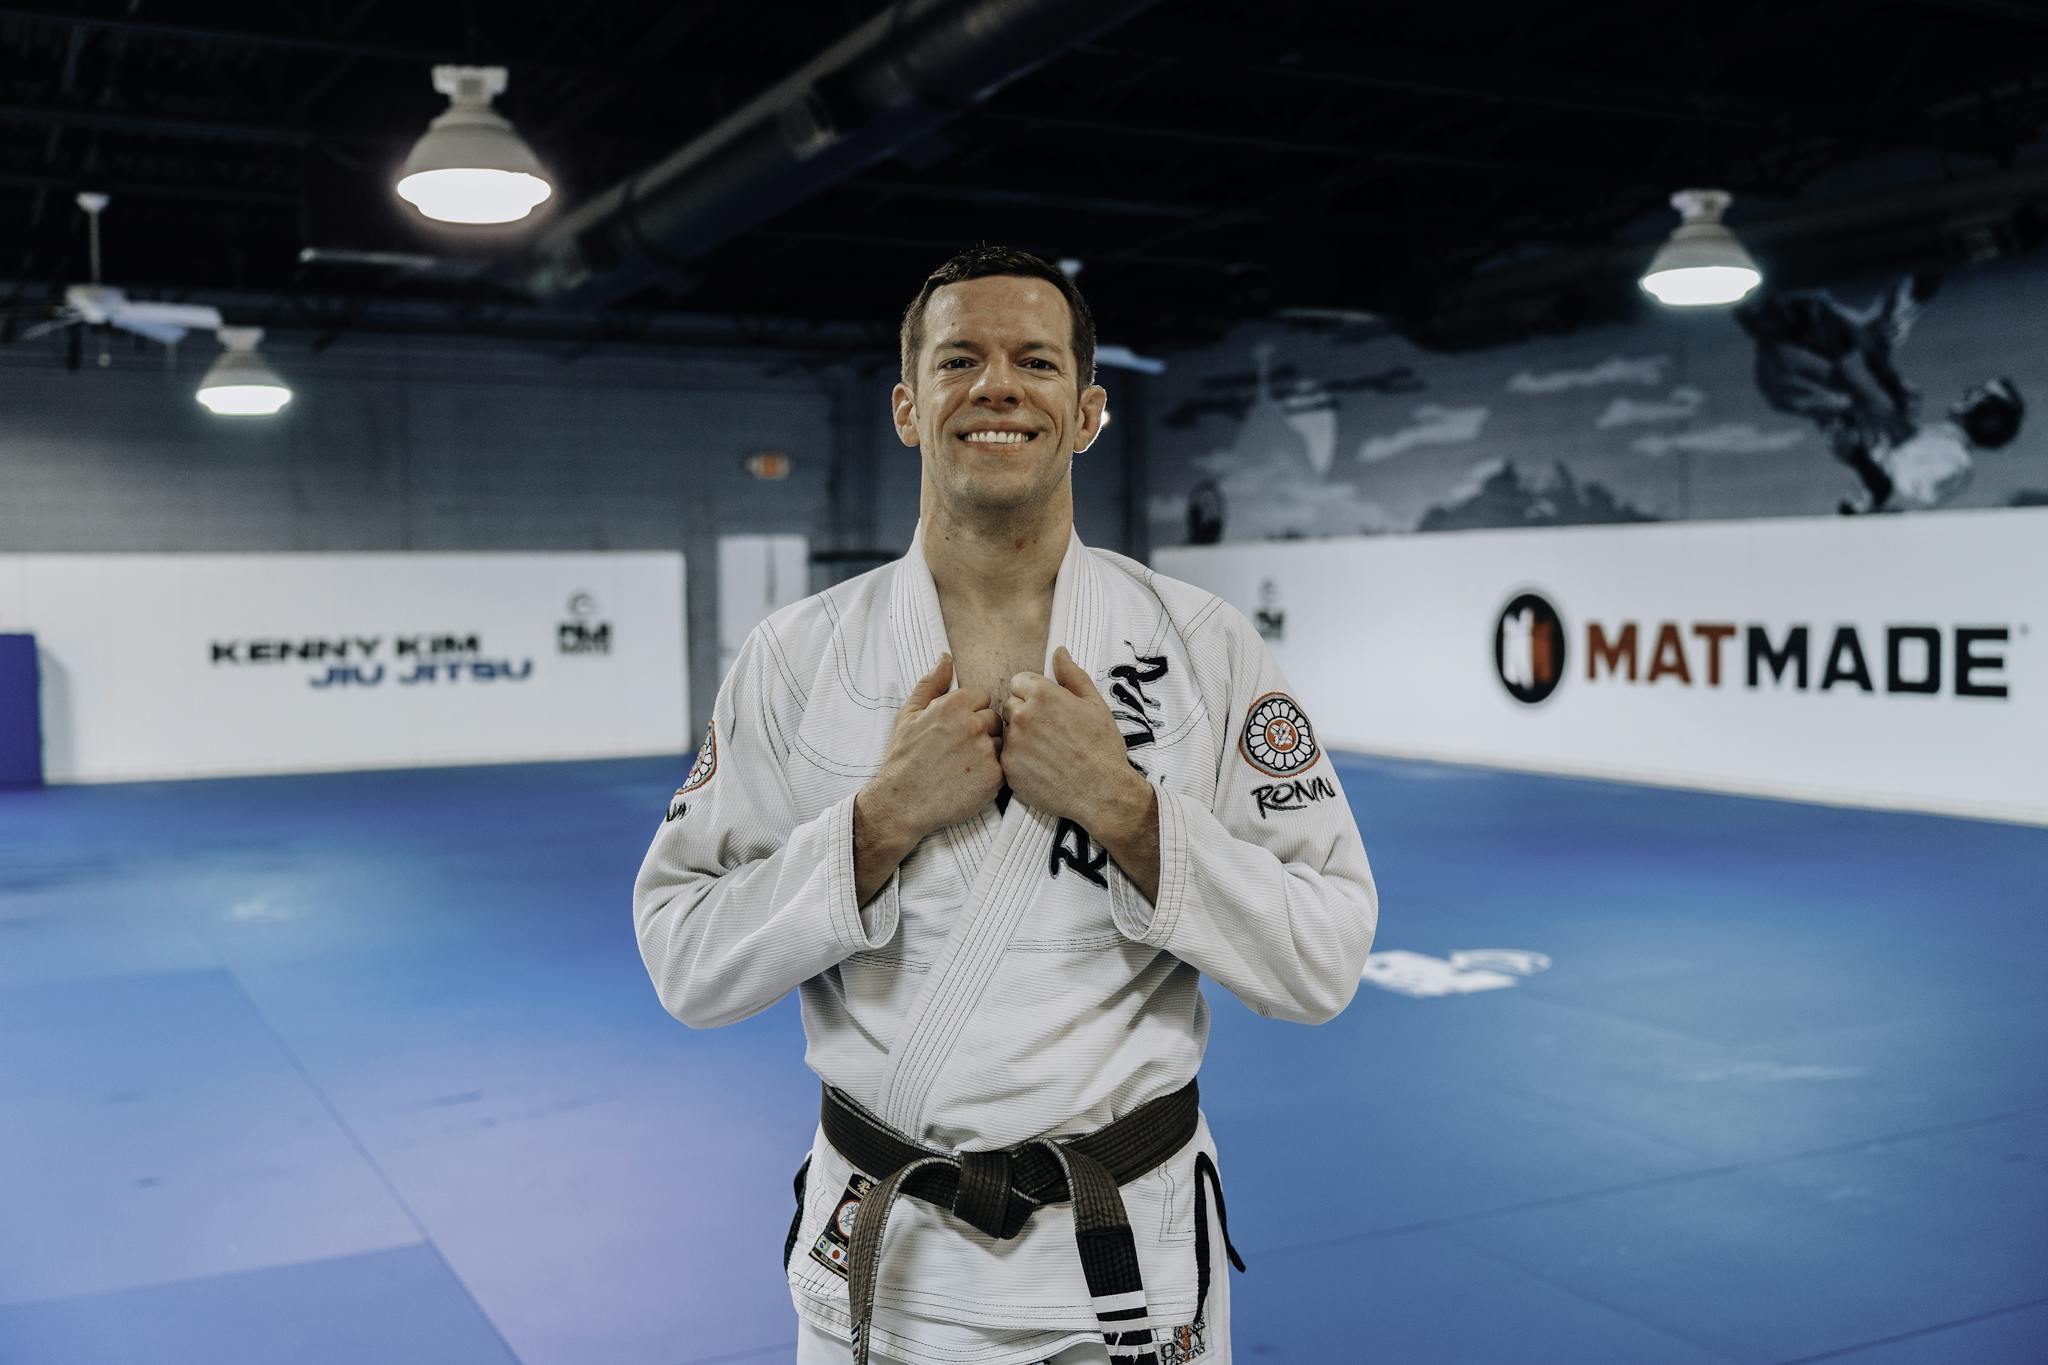 Charles Pinkham standing on the mats at Kenny Kim Brazilian Jiu Jitsu in Marietta GA